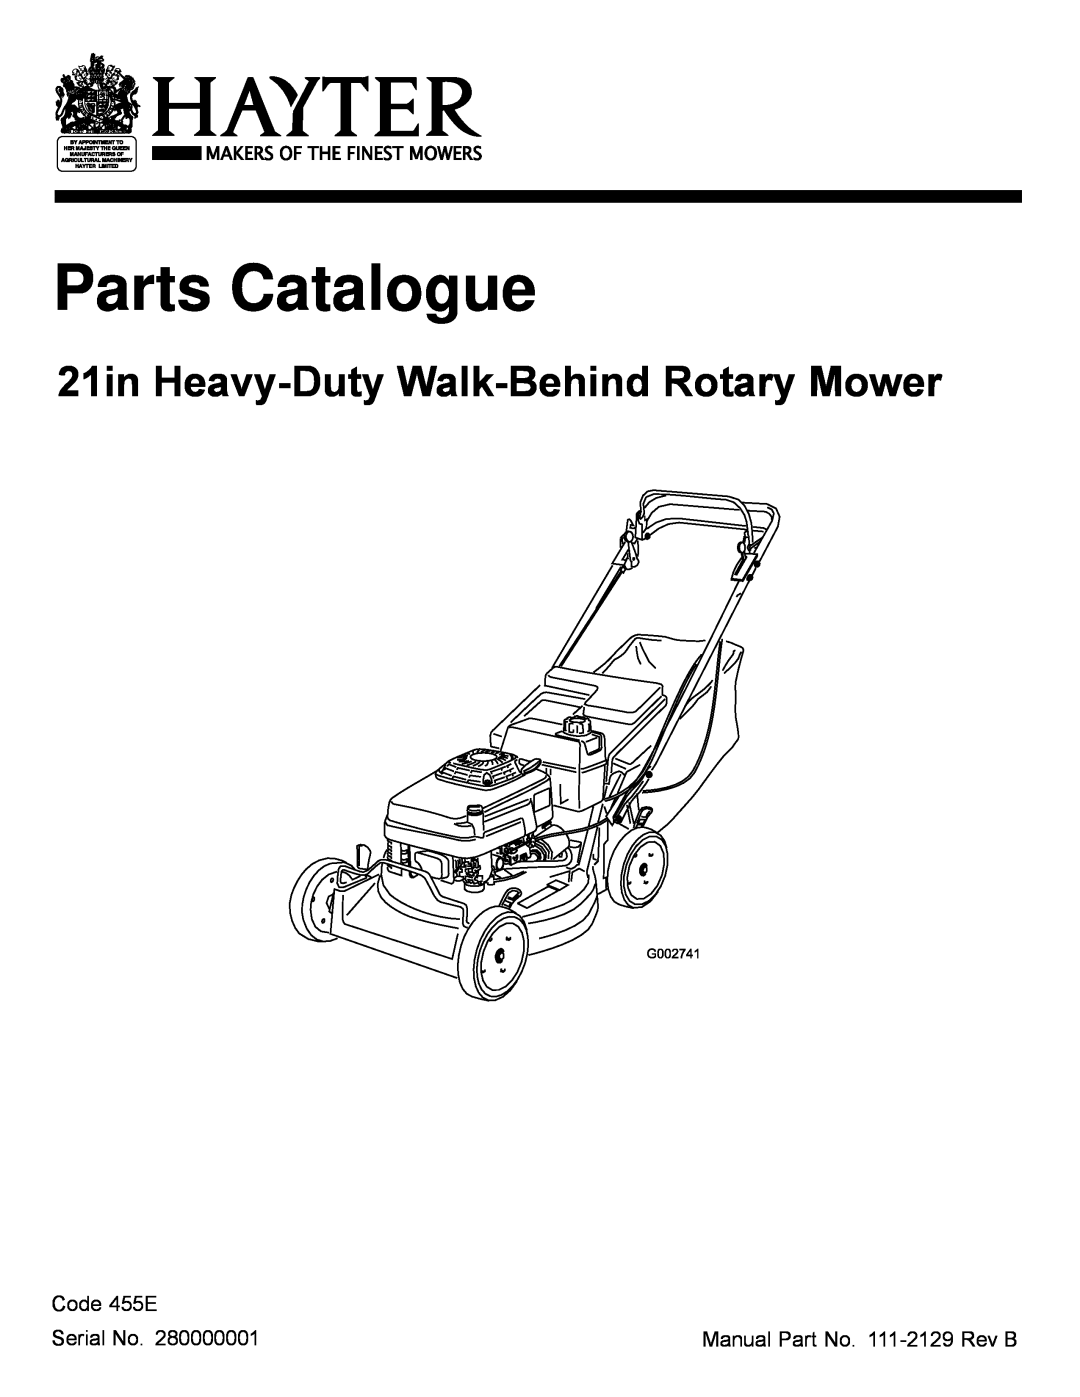 Hayter Mowers G002741 manual Parts Catalogue, 21in Heavy-Duty Walk-BehindRotary Mower, Code 455E, Serial No 